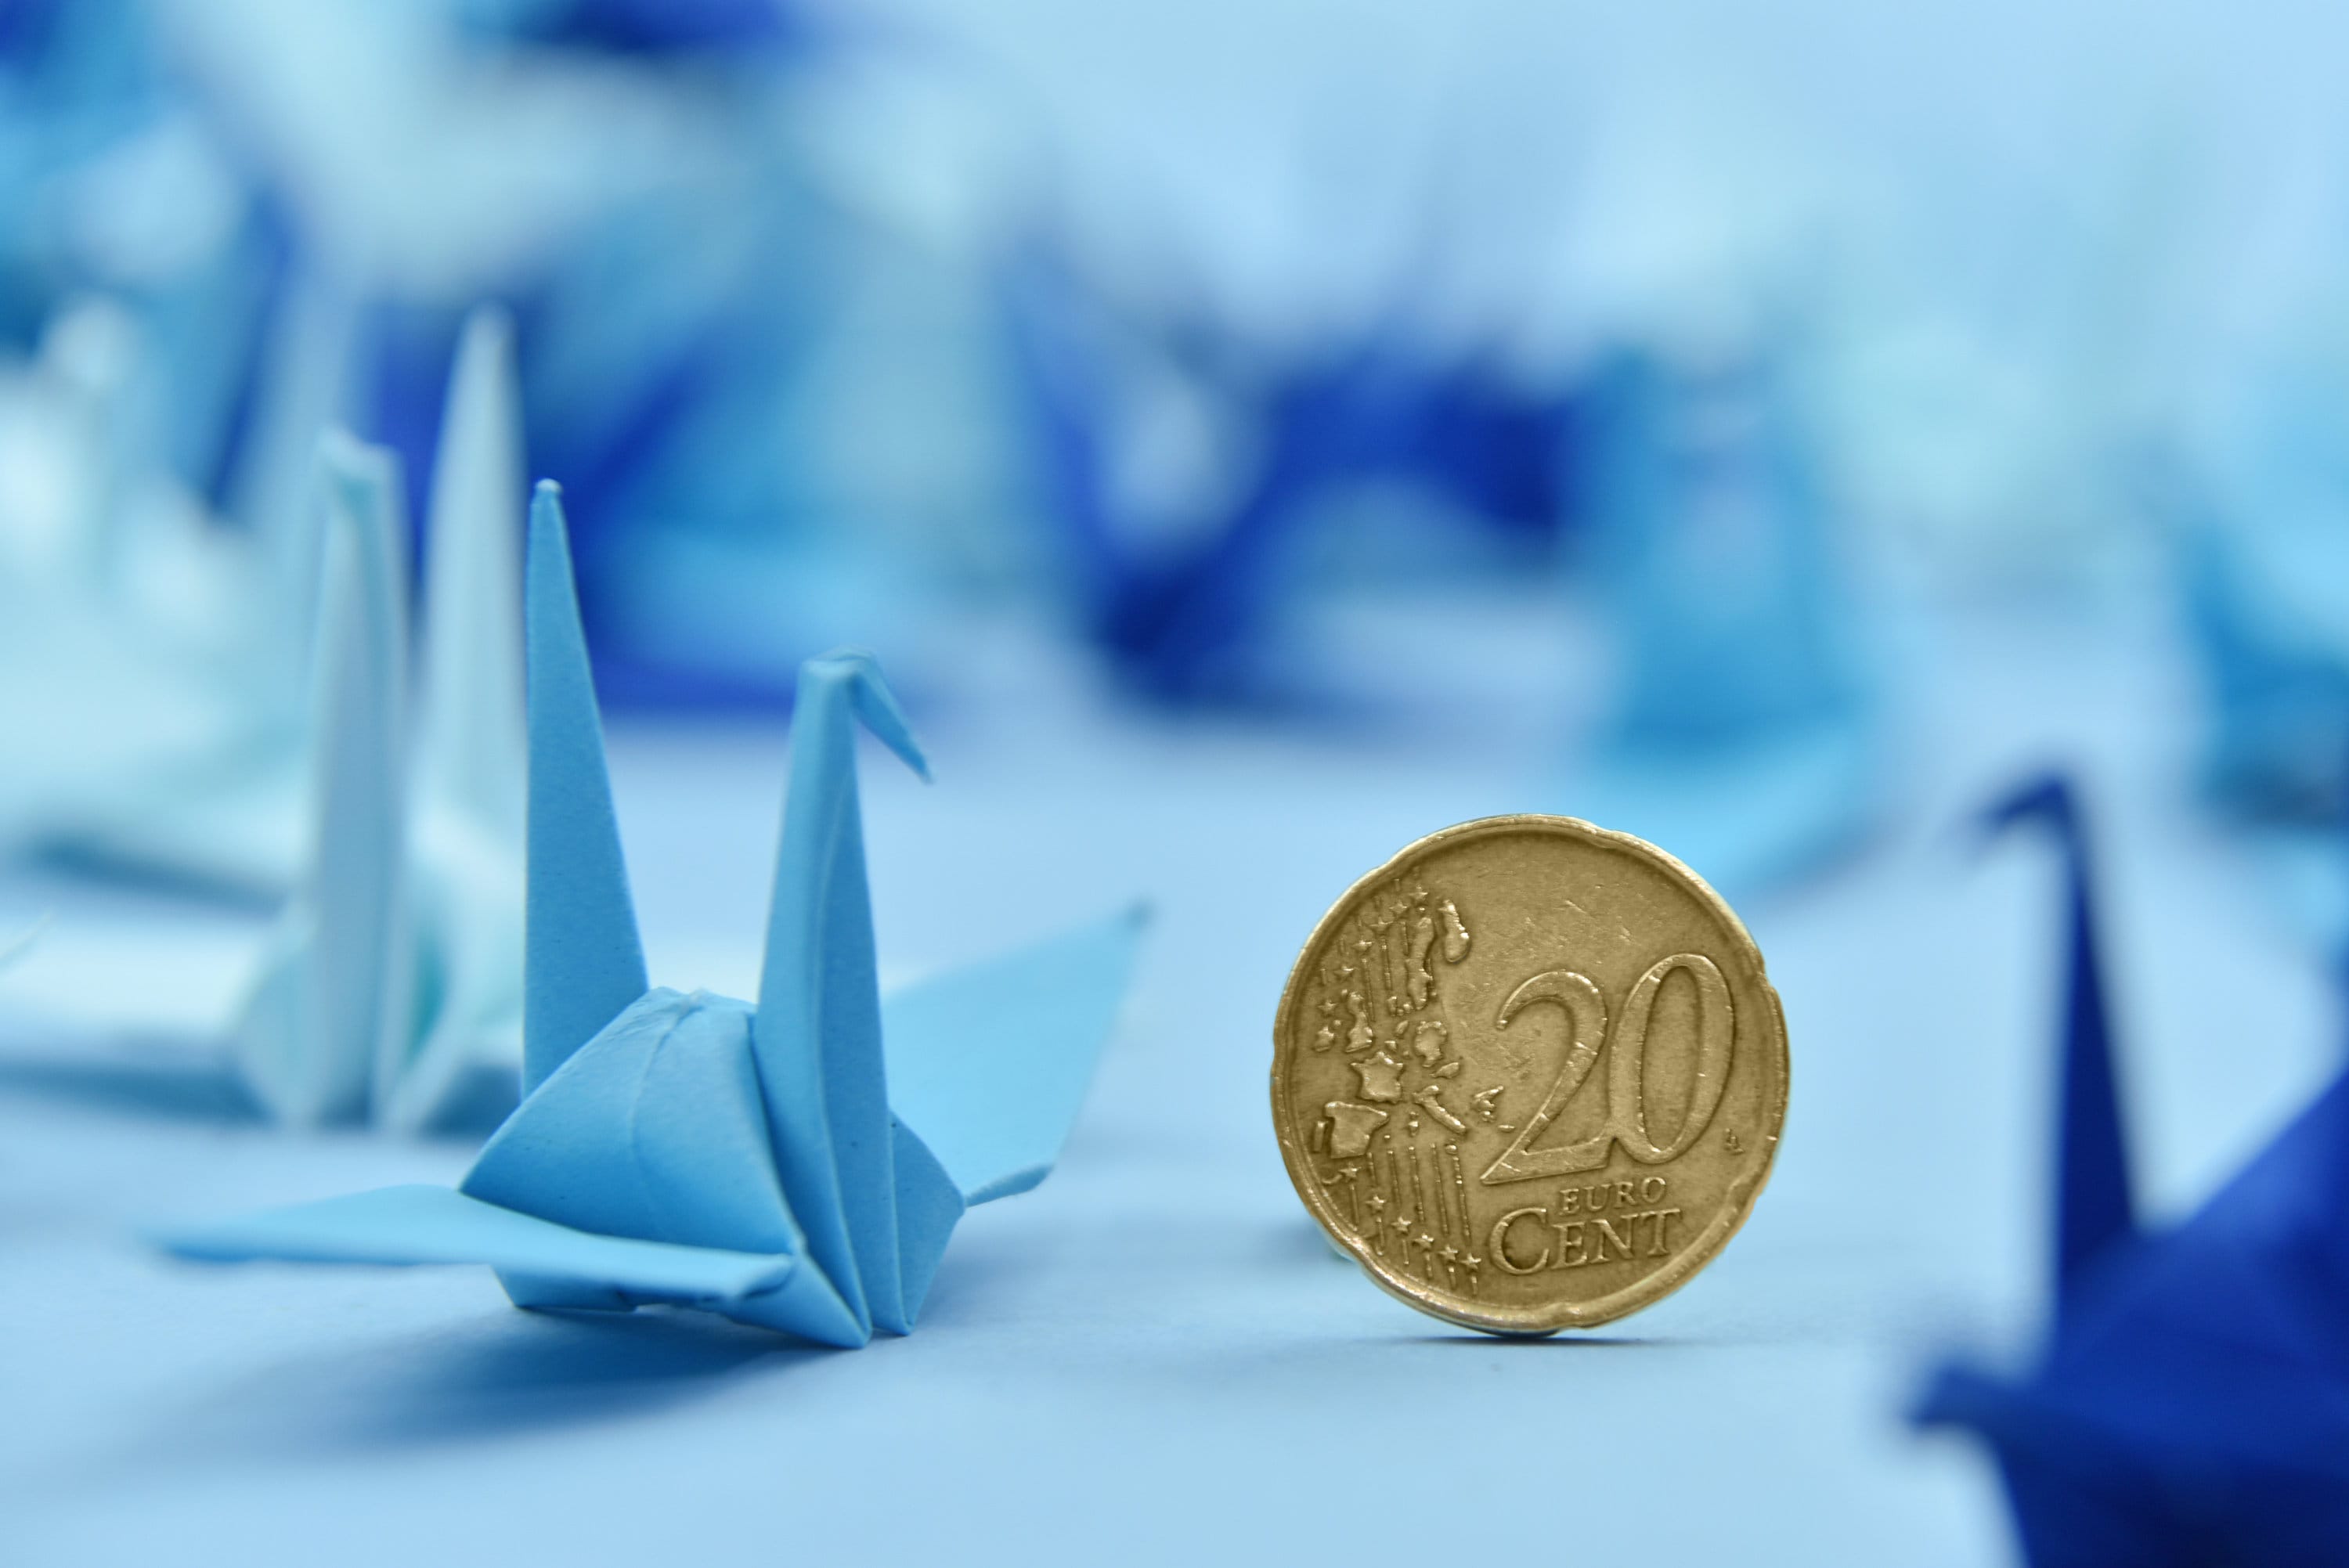 1000 Origami Paper Cranes Navy Blue 3 inch 7.5 cm origami cranes Pre-Made for Christmas Wedding Japanese Decoration